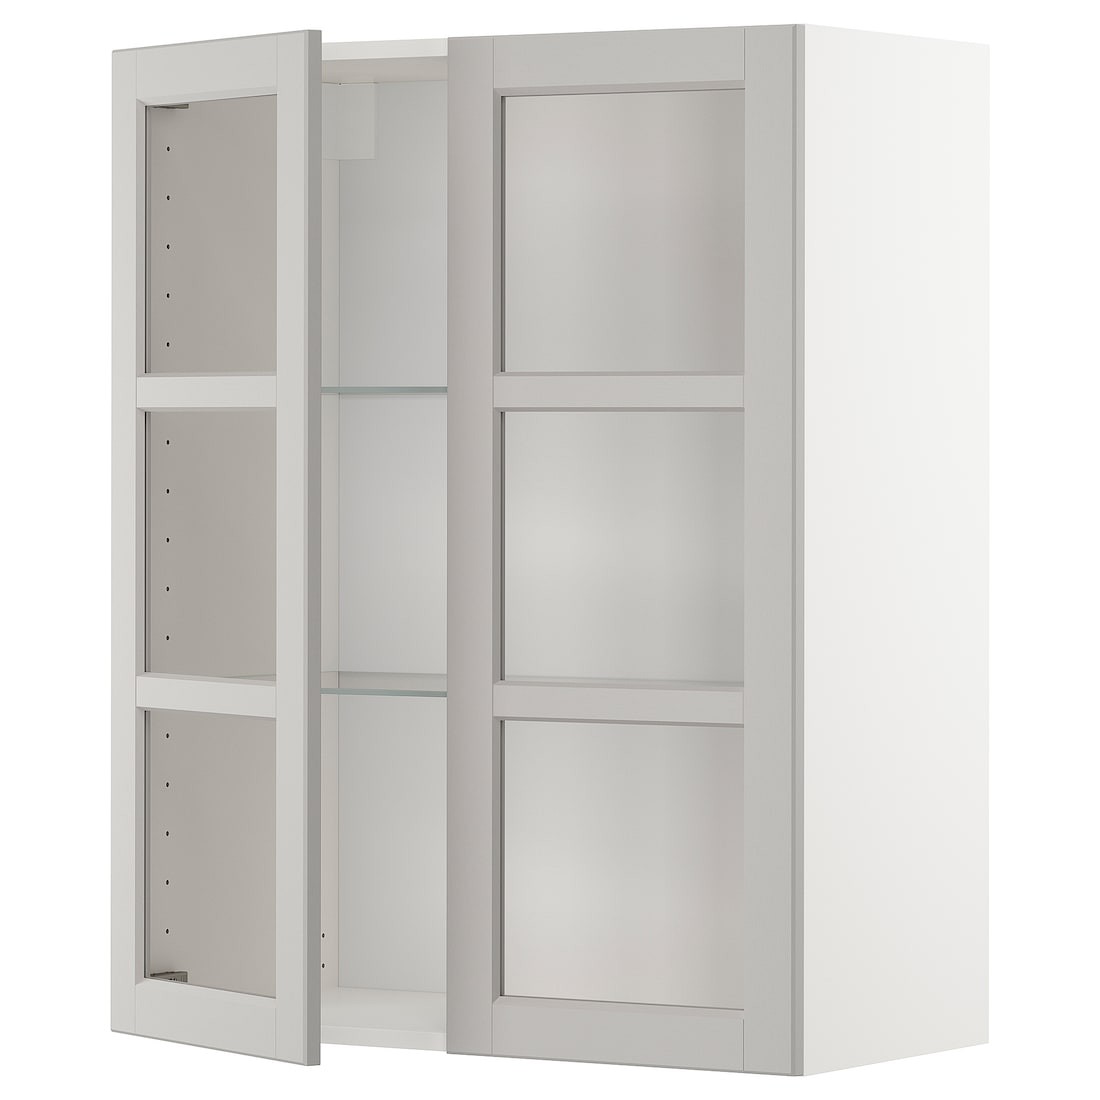 METOD МЕТОД Навесной шкаф, белый / Lerhyttan светло-серый, 80x100 см